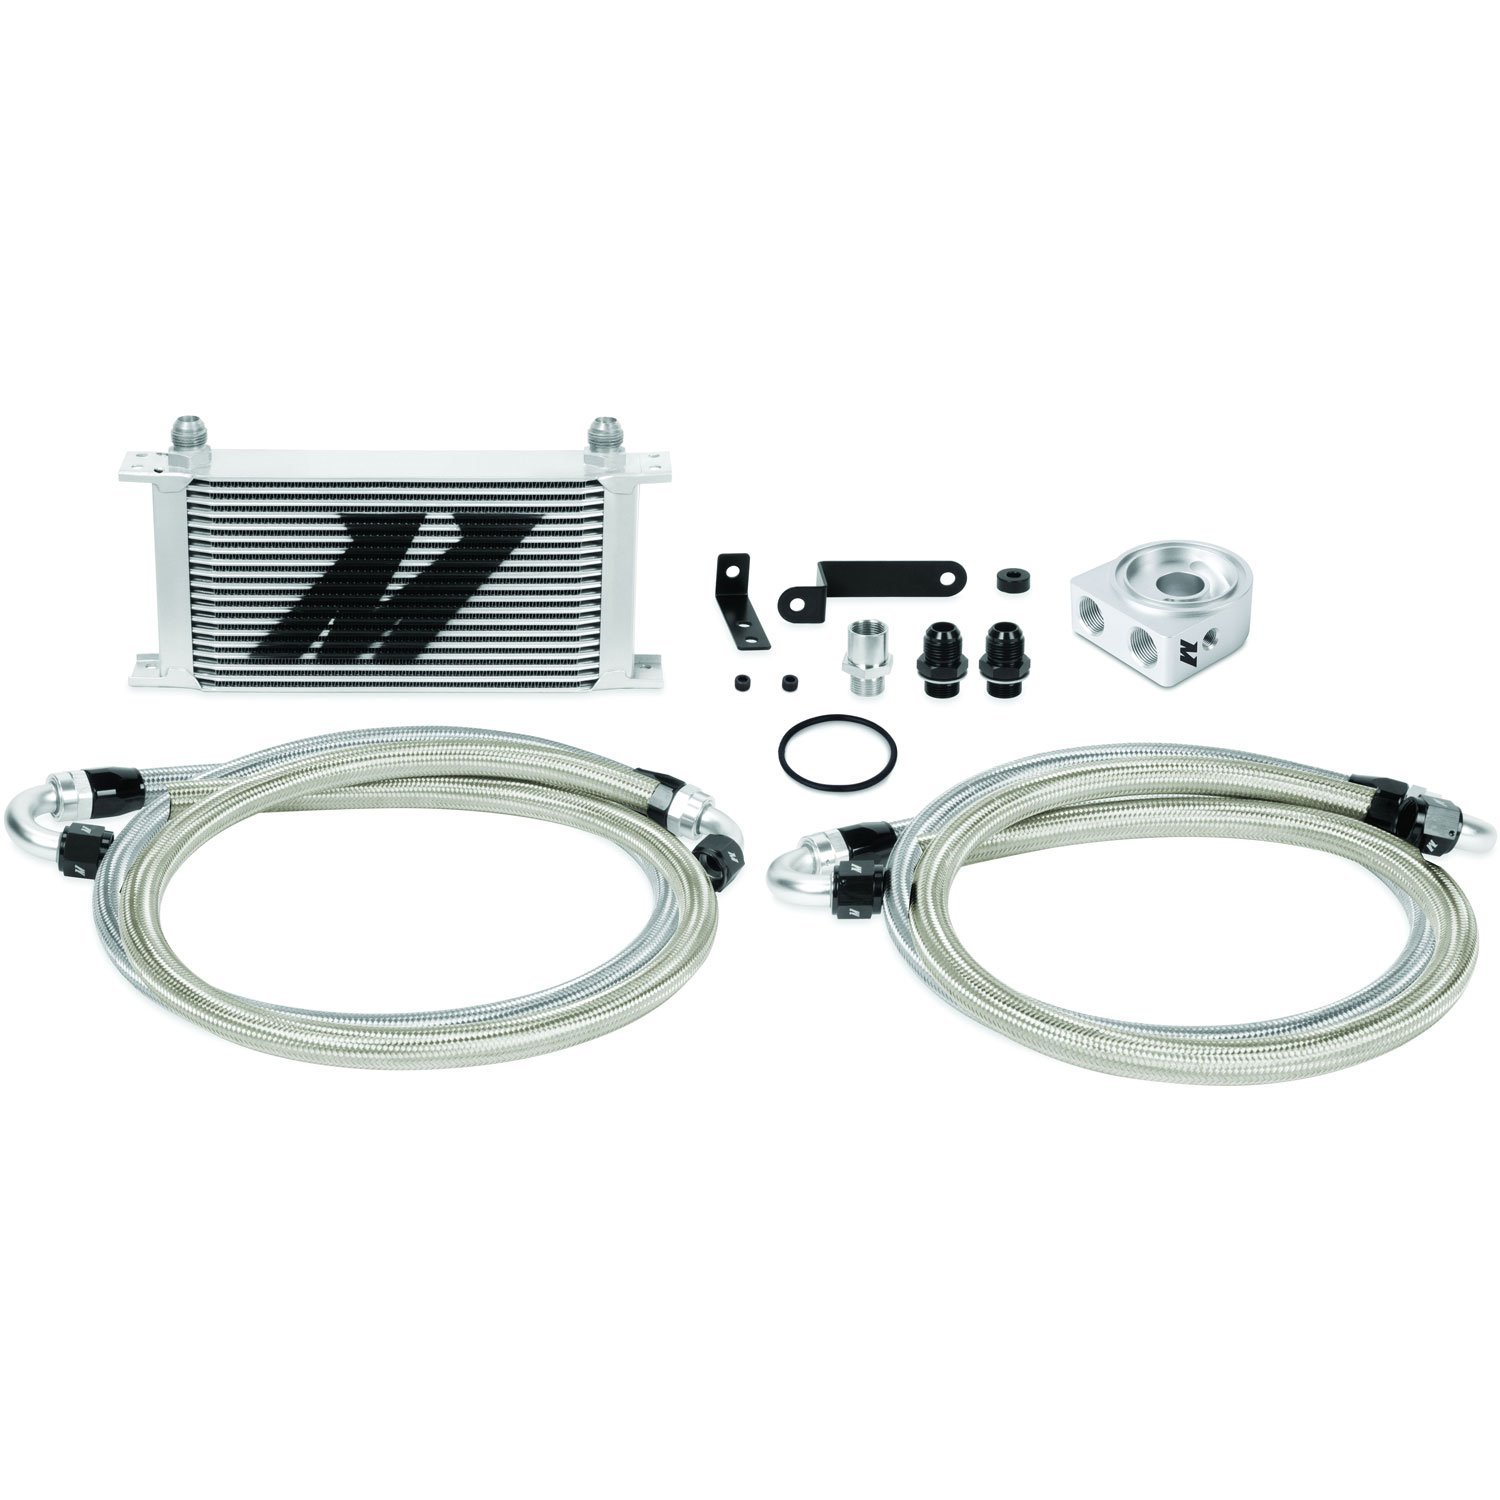 Subaru WRX STI Oil Cooler Kit - MFG Part No. MMOC-STI-08